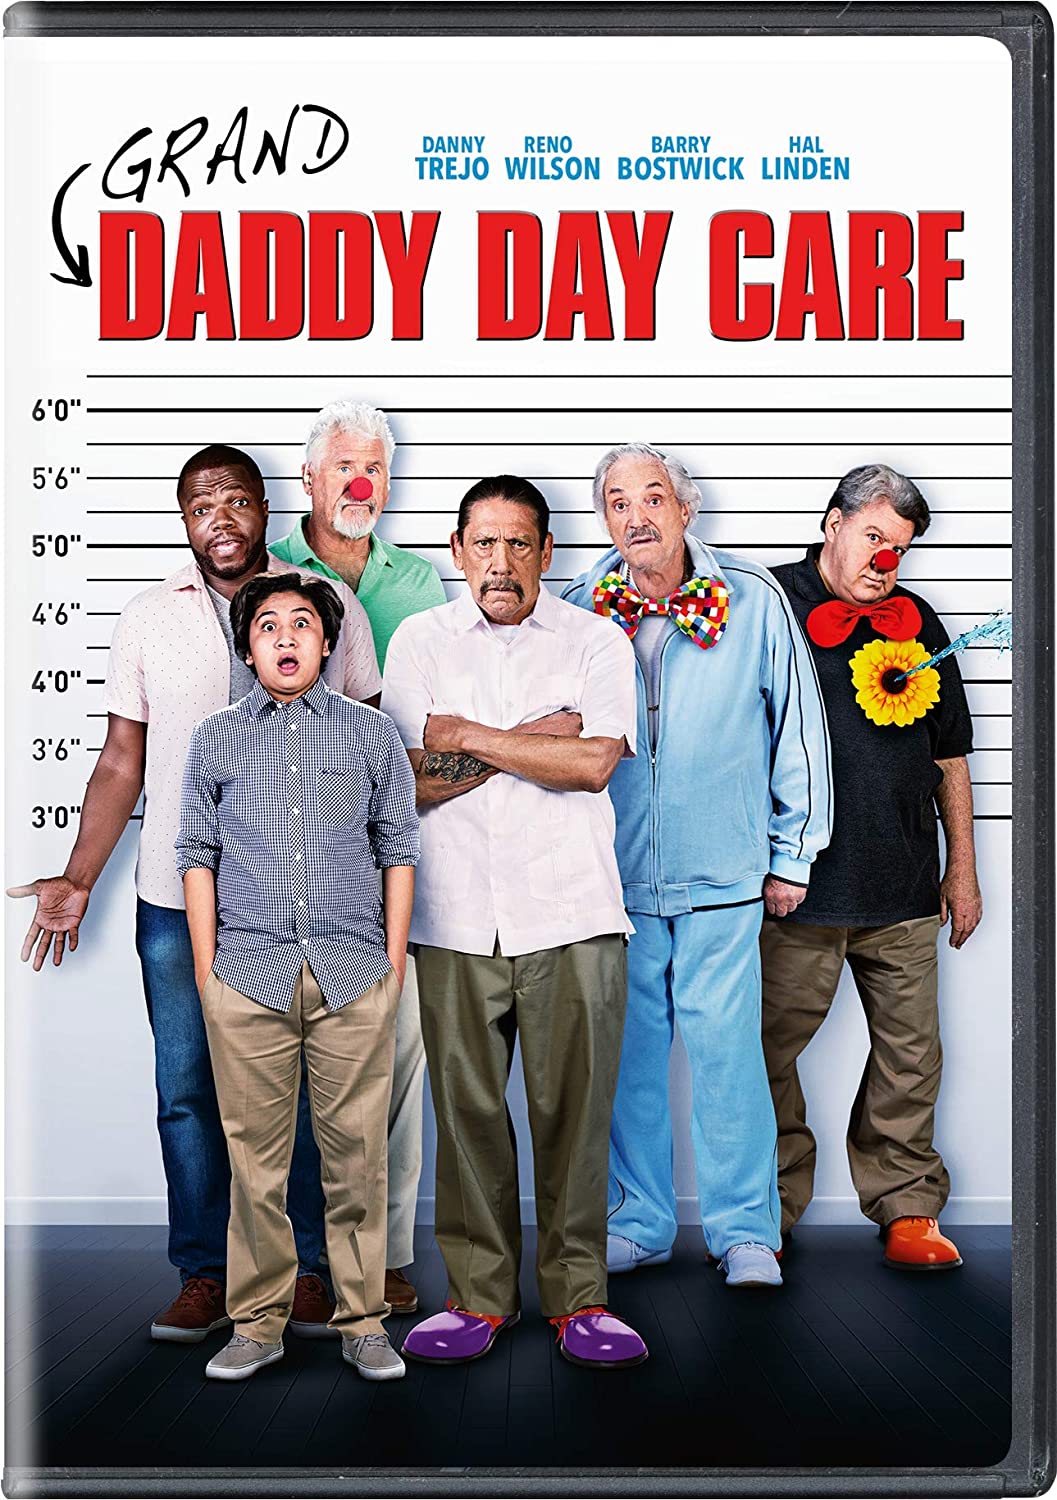 Stiahni si Filmy CZ/SK dabing Skolka pro seniory / Grand-Daddy Day Care (2019)(CZ/SK)[WEB-DL][1080p] = CSFD 50%